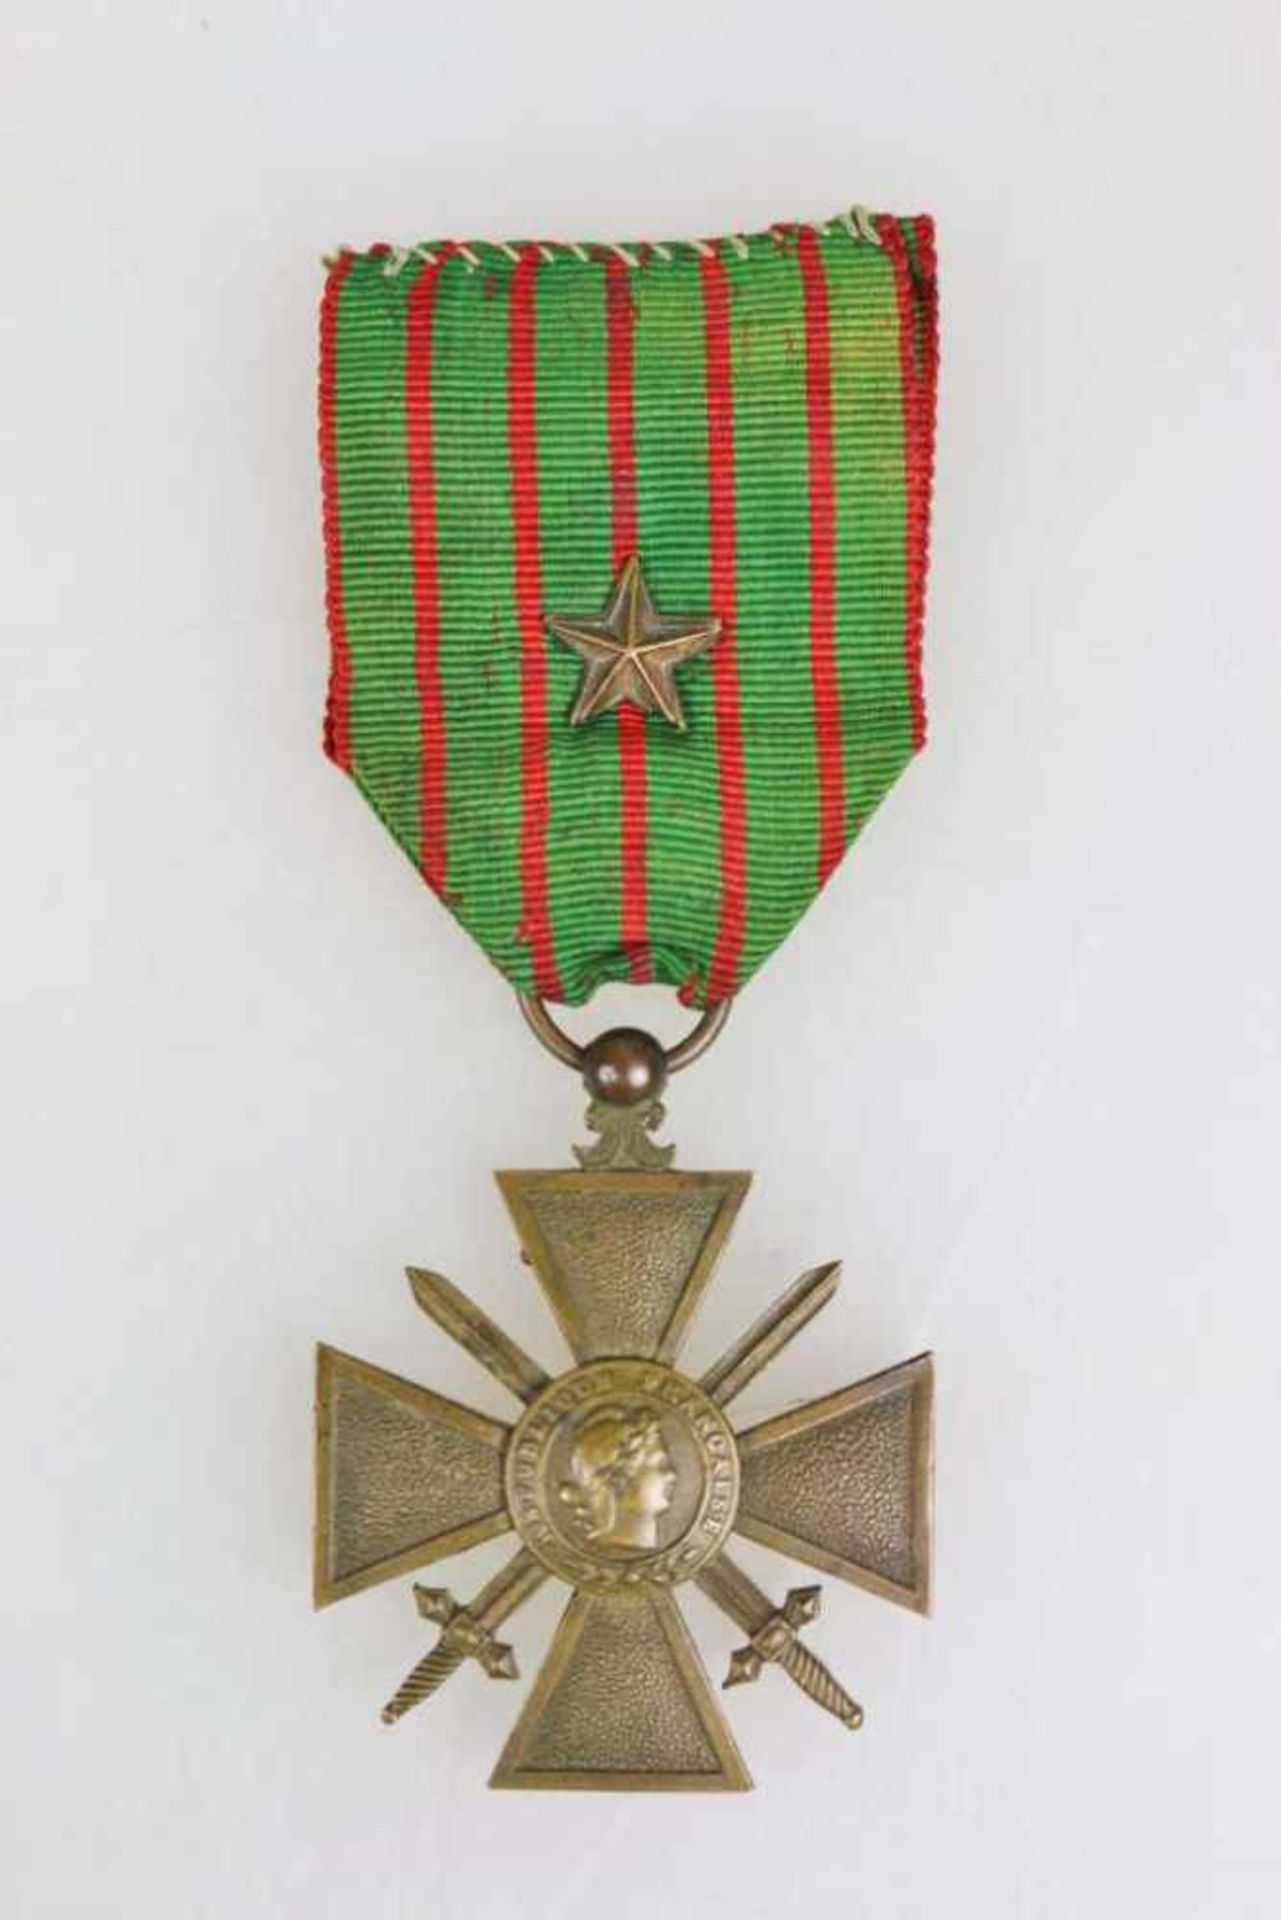 Frankreich WW1, Croix de Guerre, rückseitig datiert 1914/1917 am grünen Band mit roten Streifen